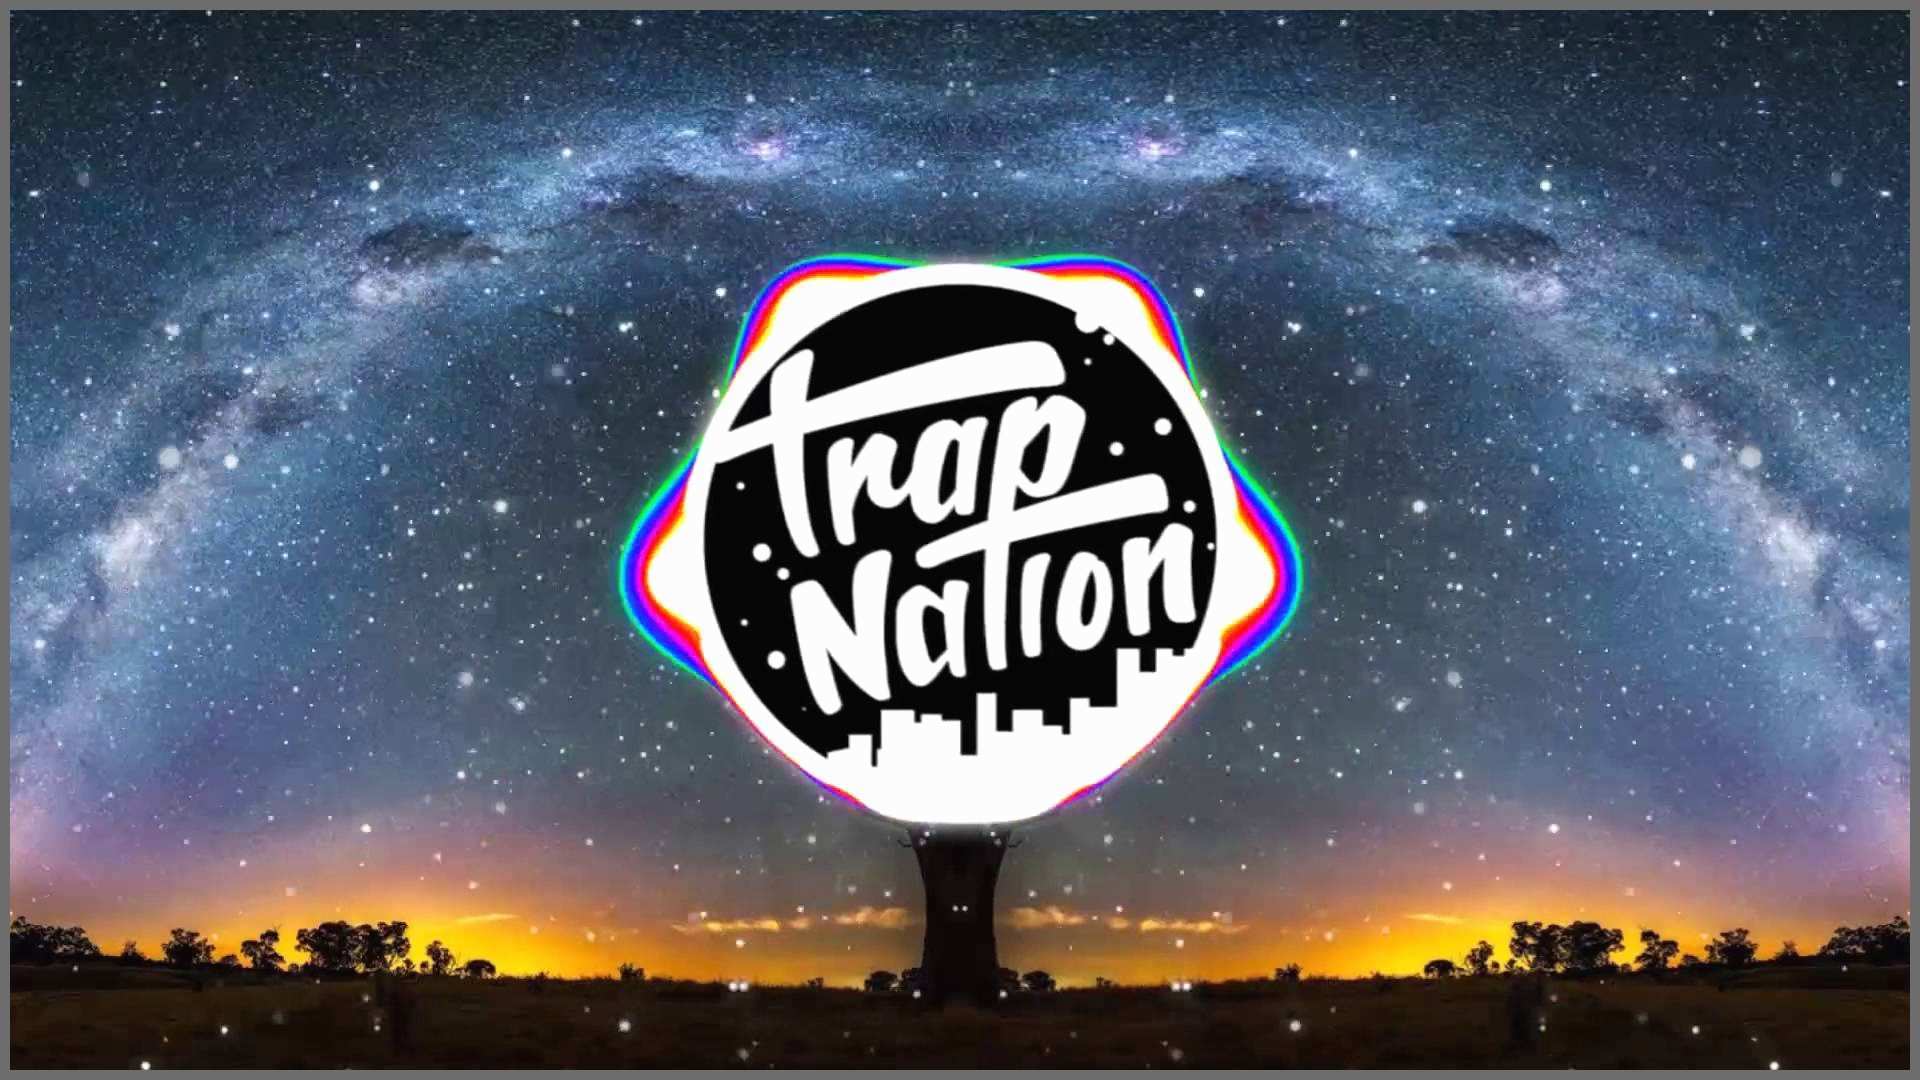 Trap Nation Logo Creator Amazing Lookas Apollo - Full Hd Trap Nation Fondos De Pantalla , HD Wallpaper & Backgrounds